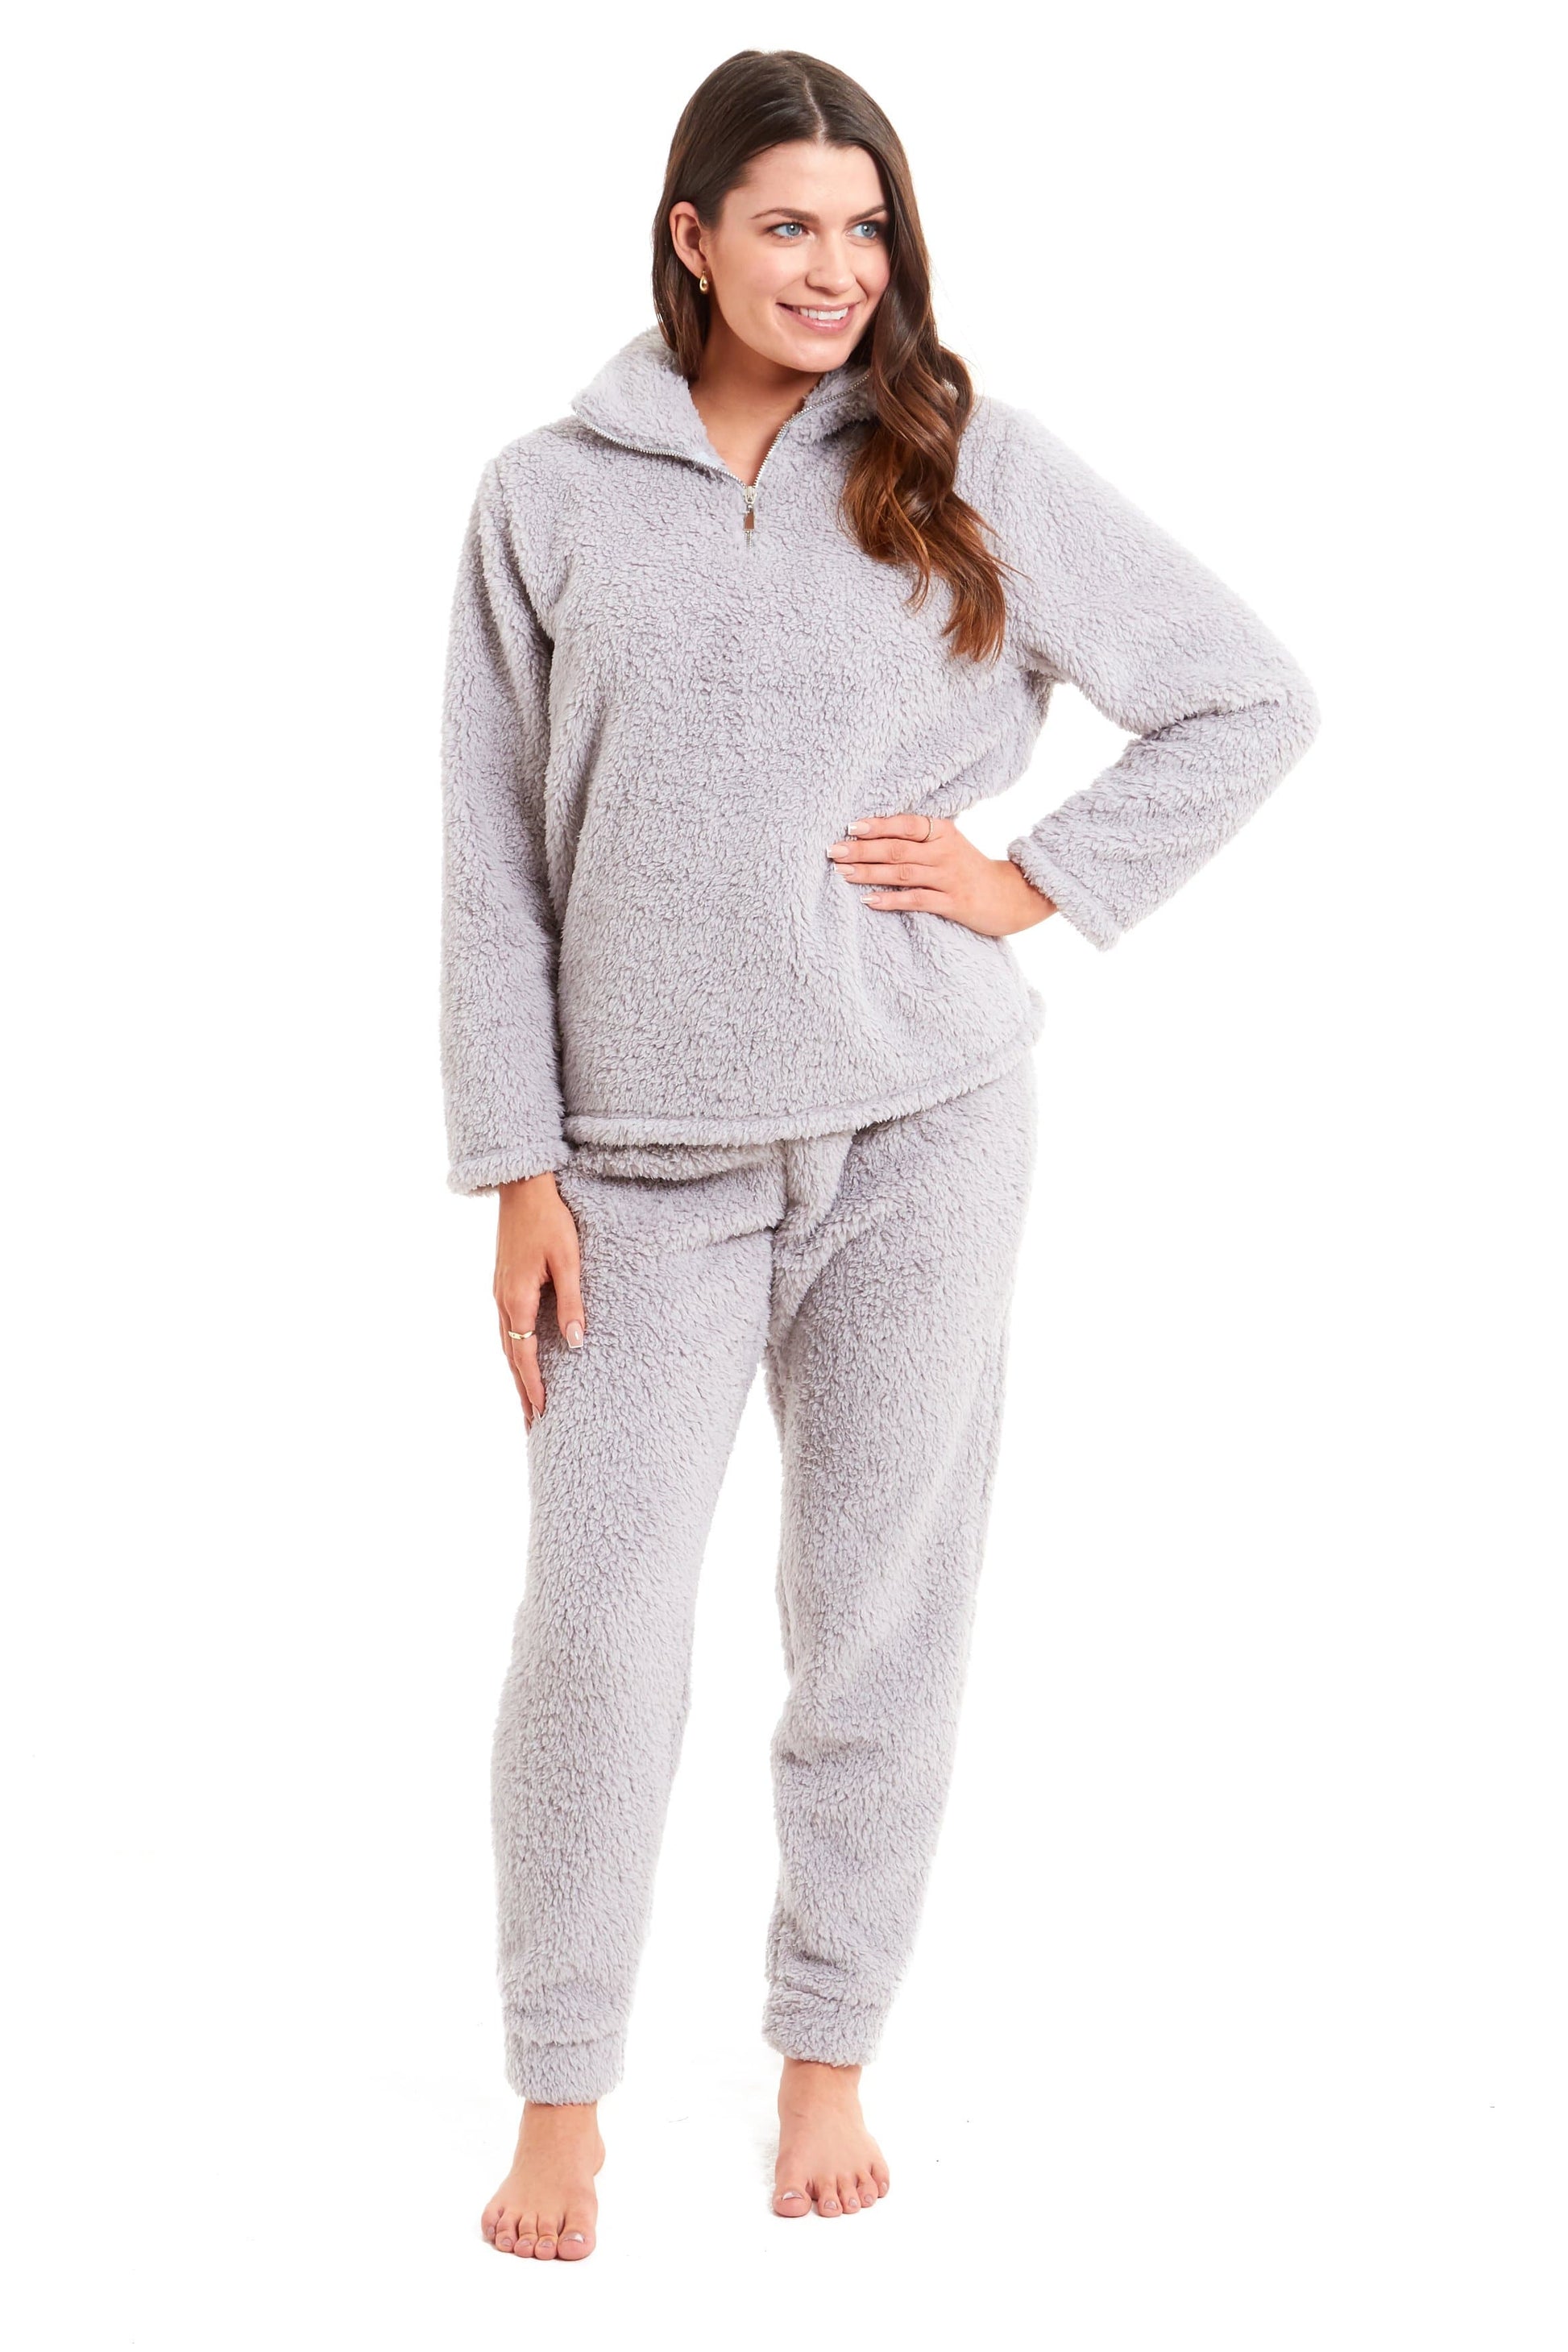 Lucky Brand Women's Pajama 3 Piece Set (Navy/Grey, Small) 